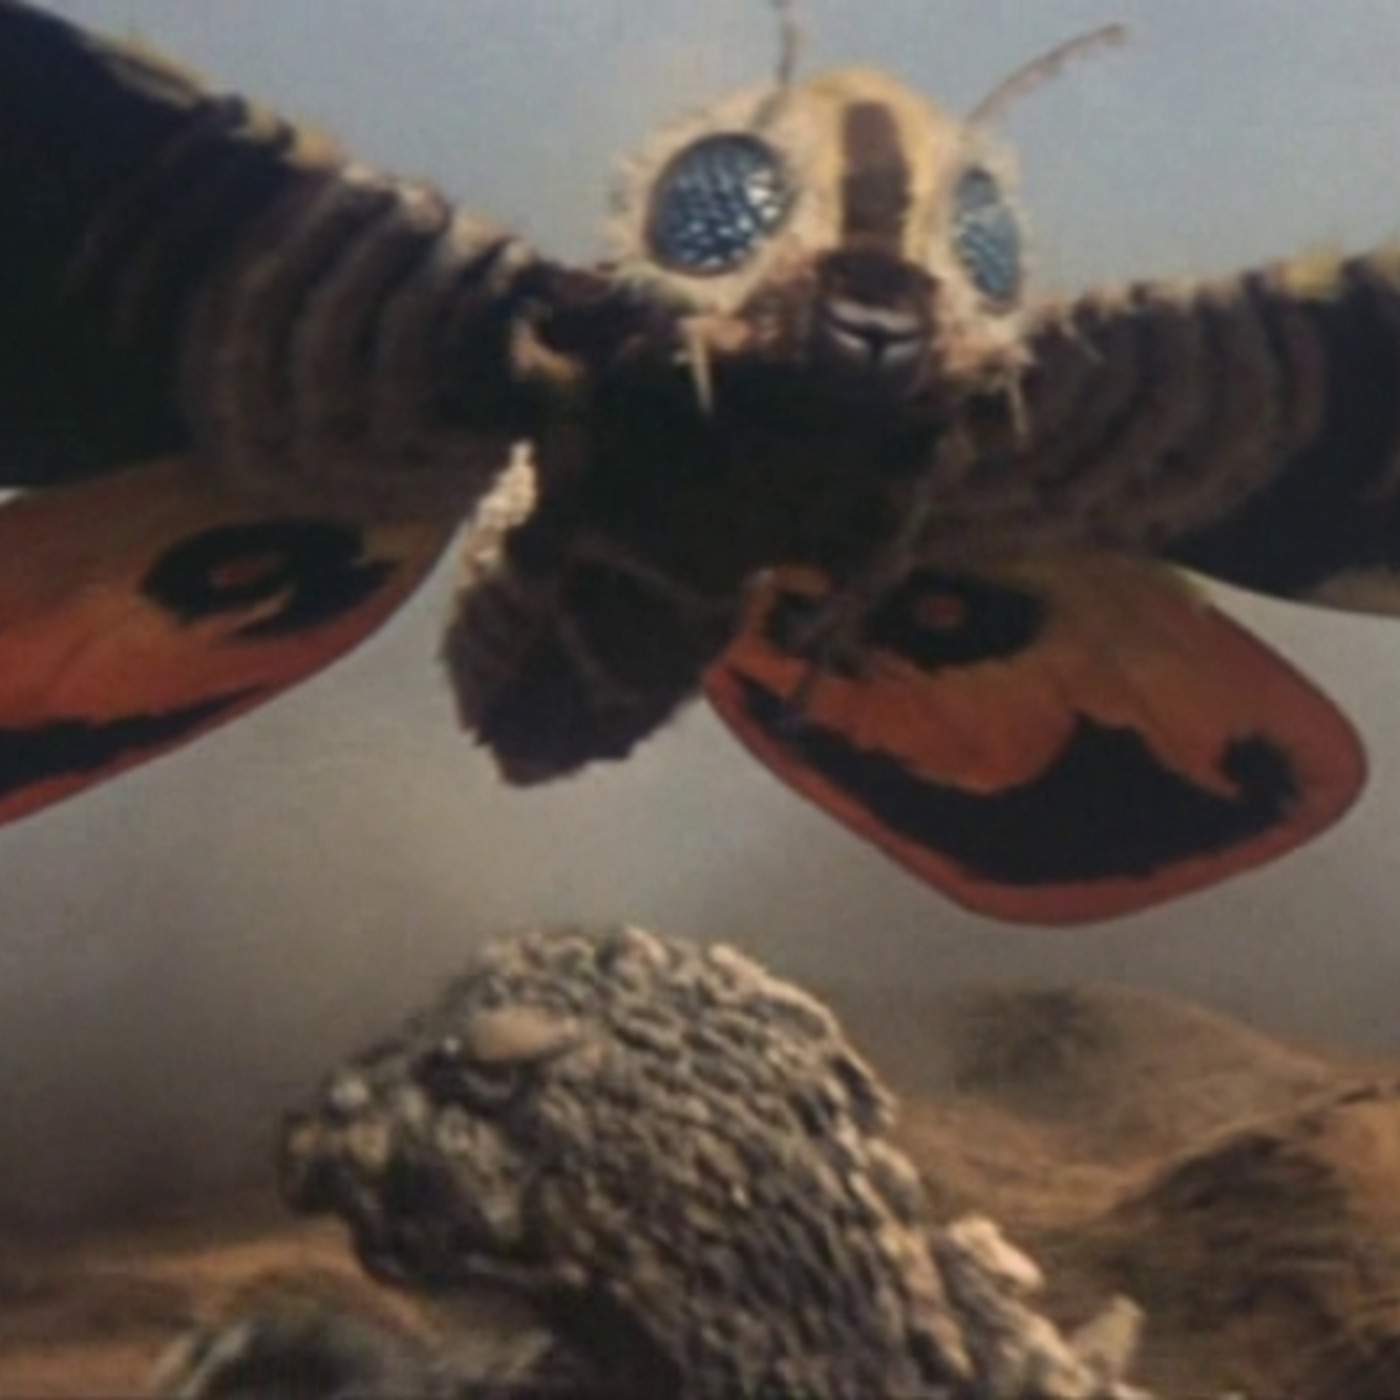 Ep. 9: Mothra (1961) & Mothra Vs. Godzilla (1964)